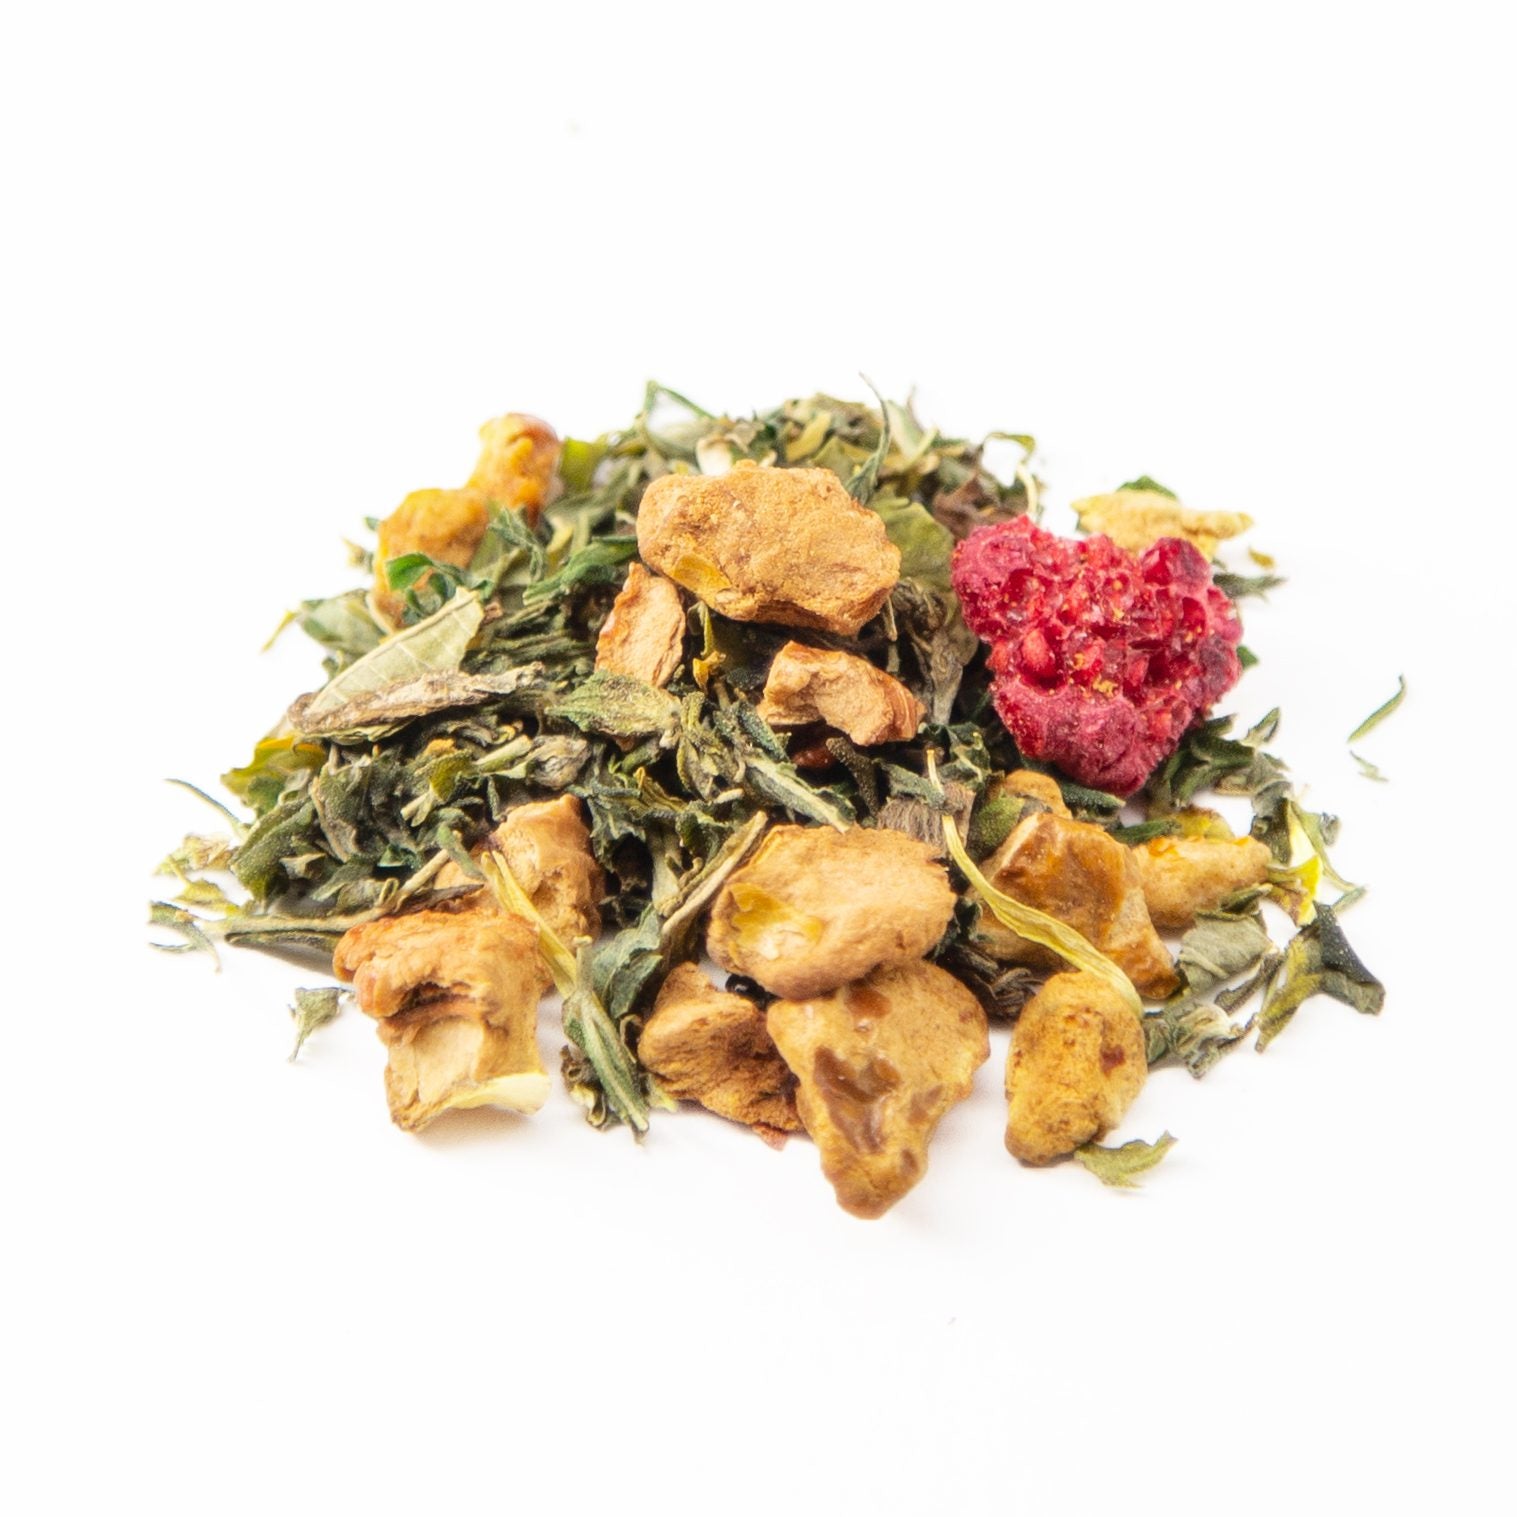 Organic Elves Herbal Tea with Hemp 30g - Pure Extract CBD